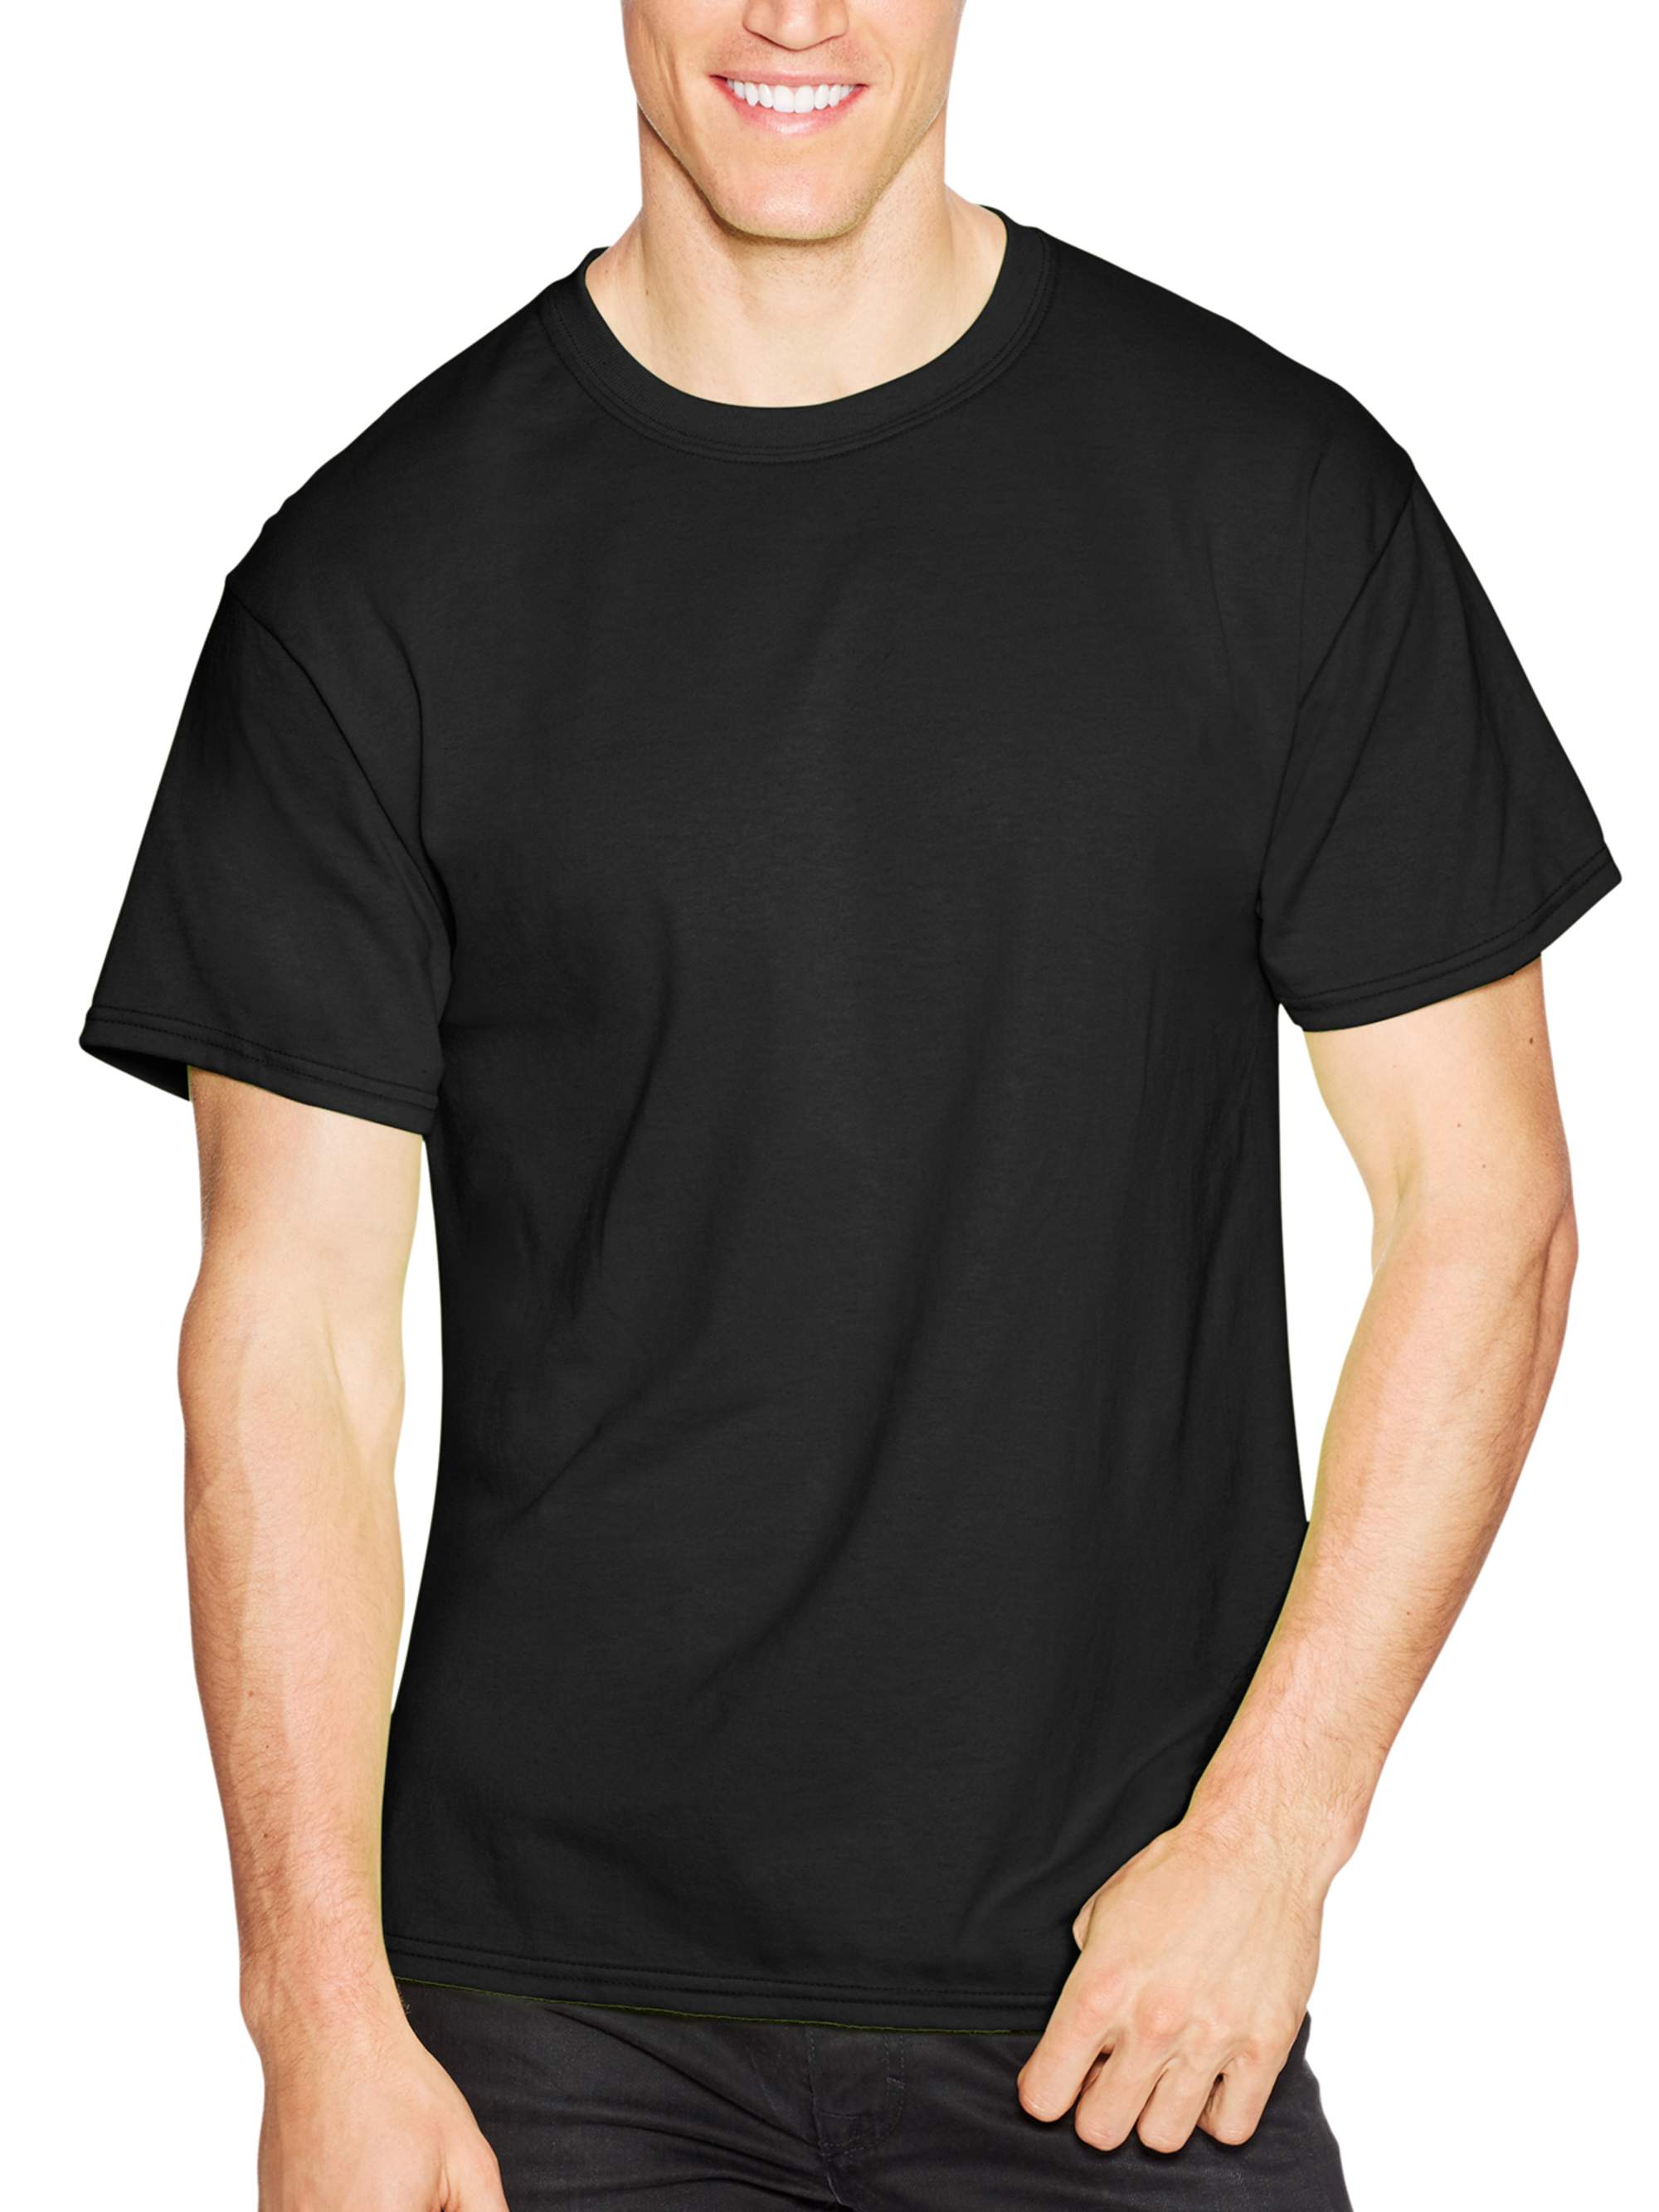 Hanes Men's EcoSmart Short Sleeve T-shirt (4-pack) - Walmart.com